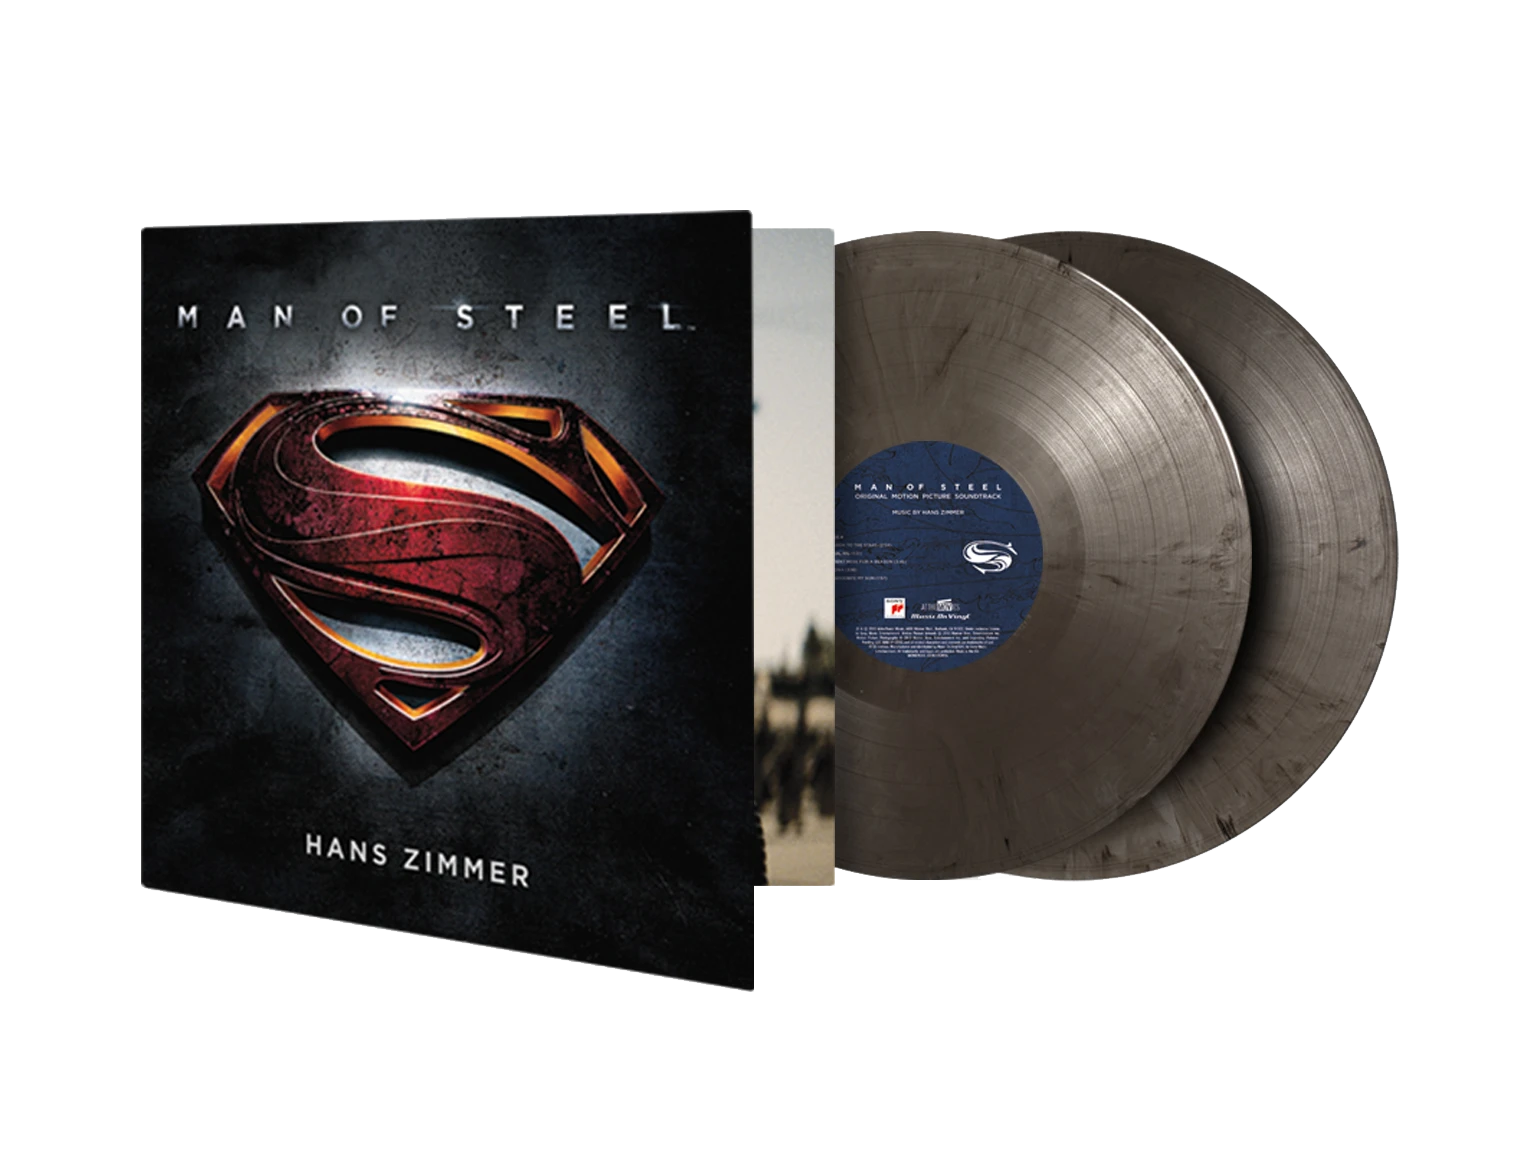 Man of Steel [Original Score] [Limited Edition] LP (Vinyl, Jul-2013,  WaterTower Music) for sale online